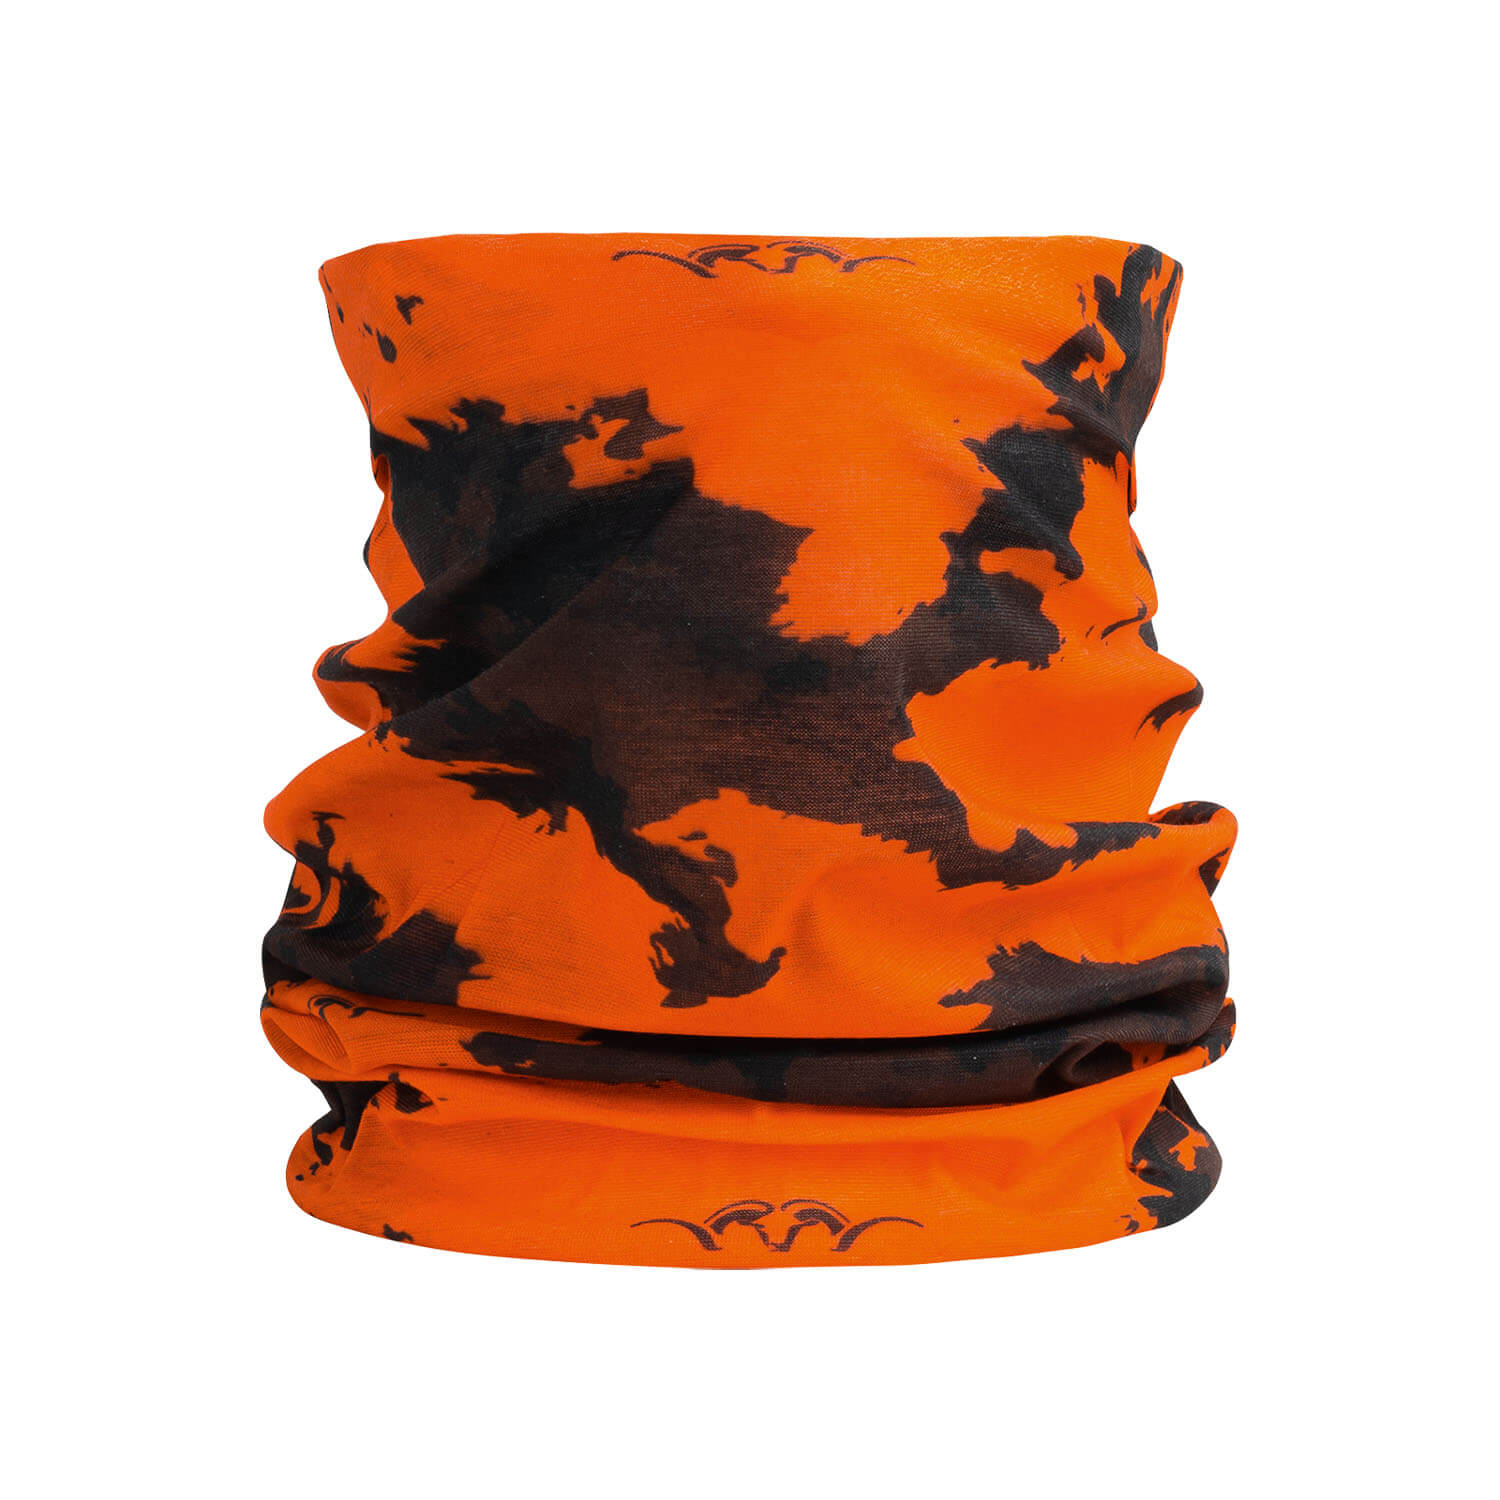 Blaser Buisvormige sjaal Multi-Tube (Blaze Orange) - Sjaals & nekwarmer